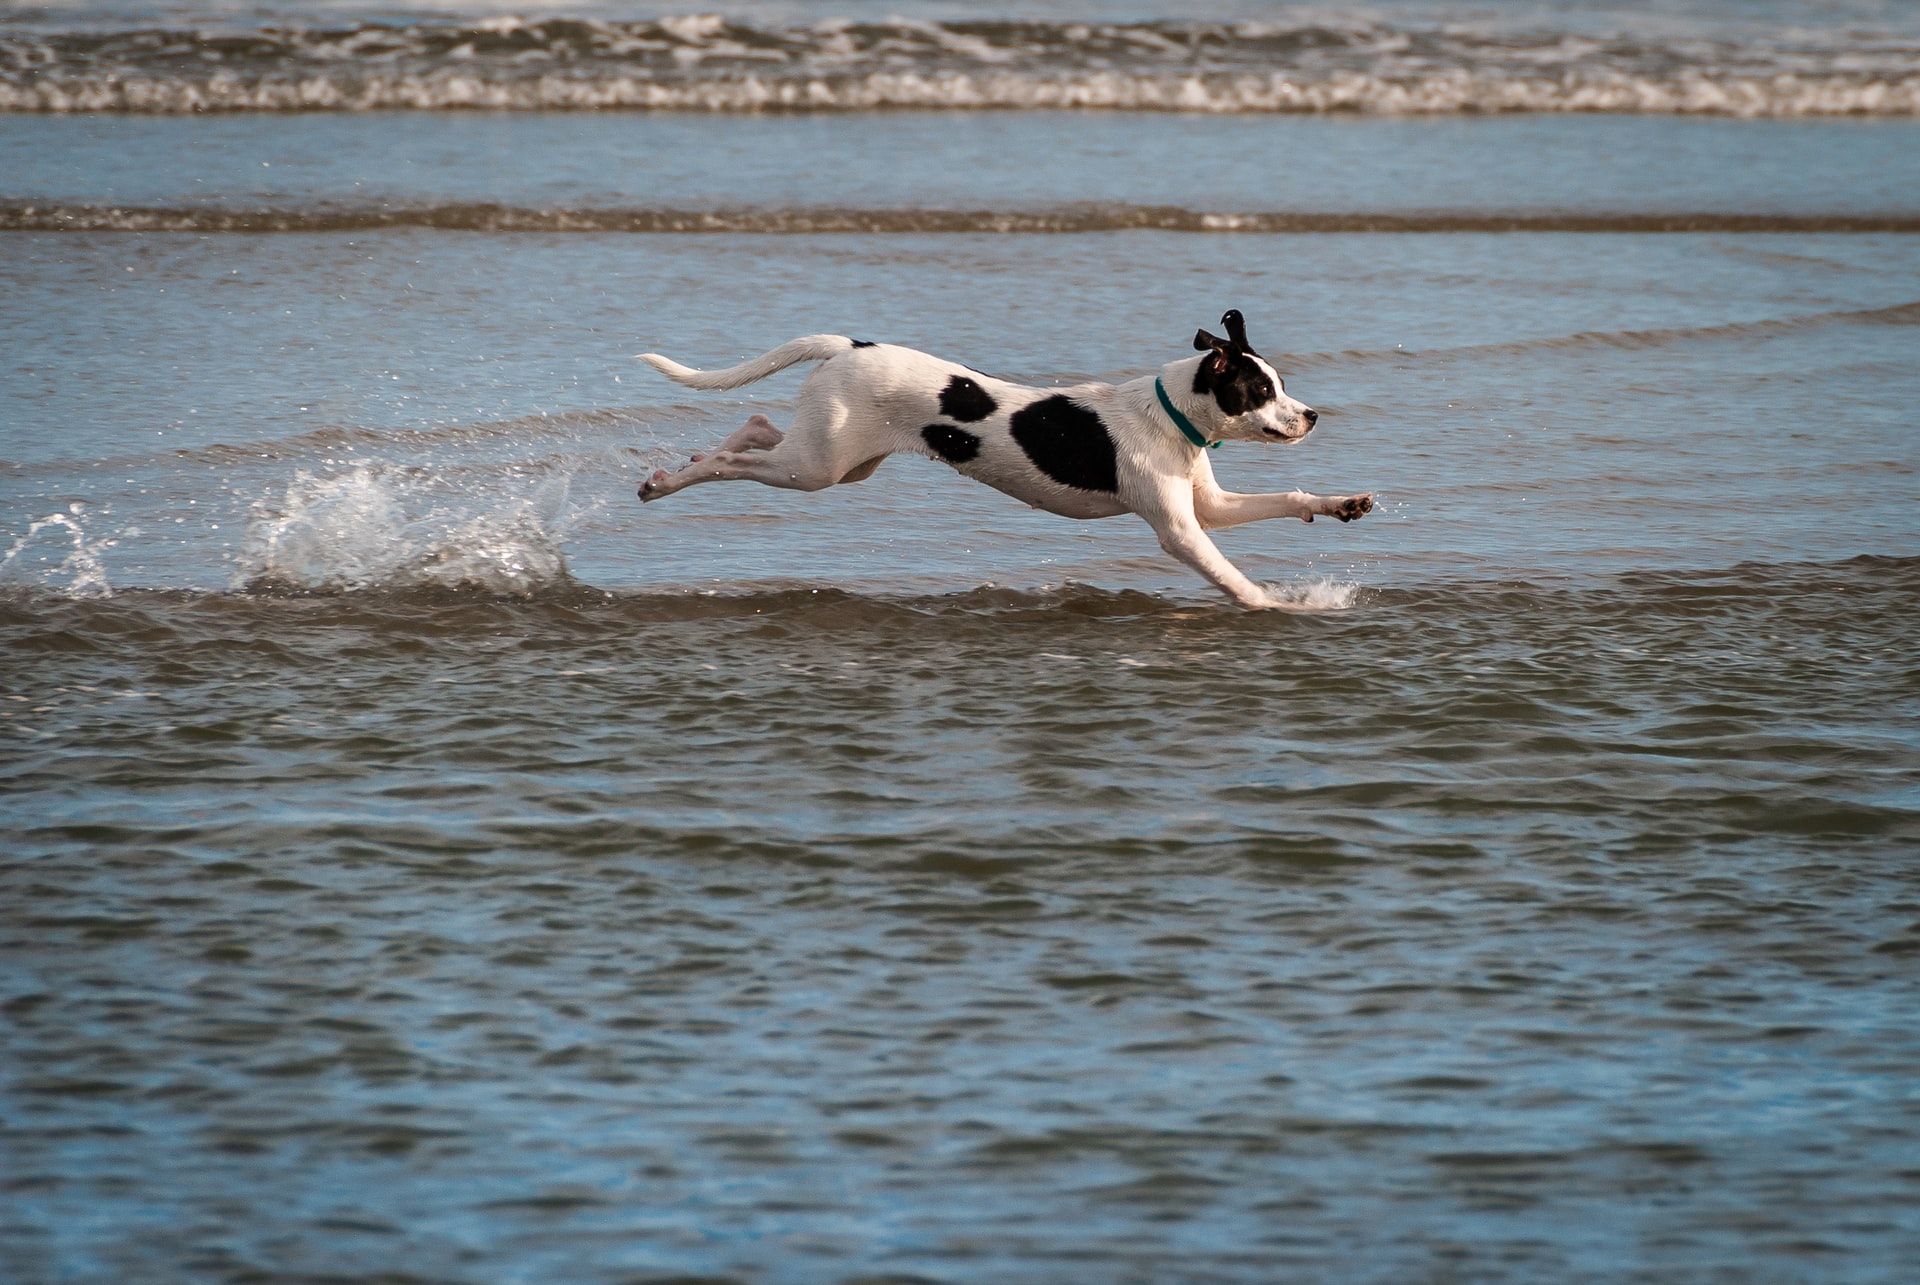 A sprinting dog